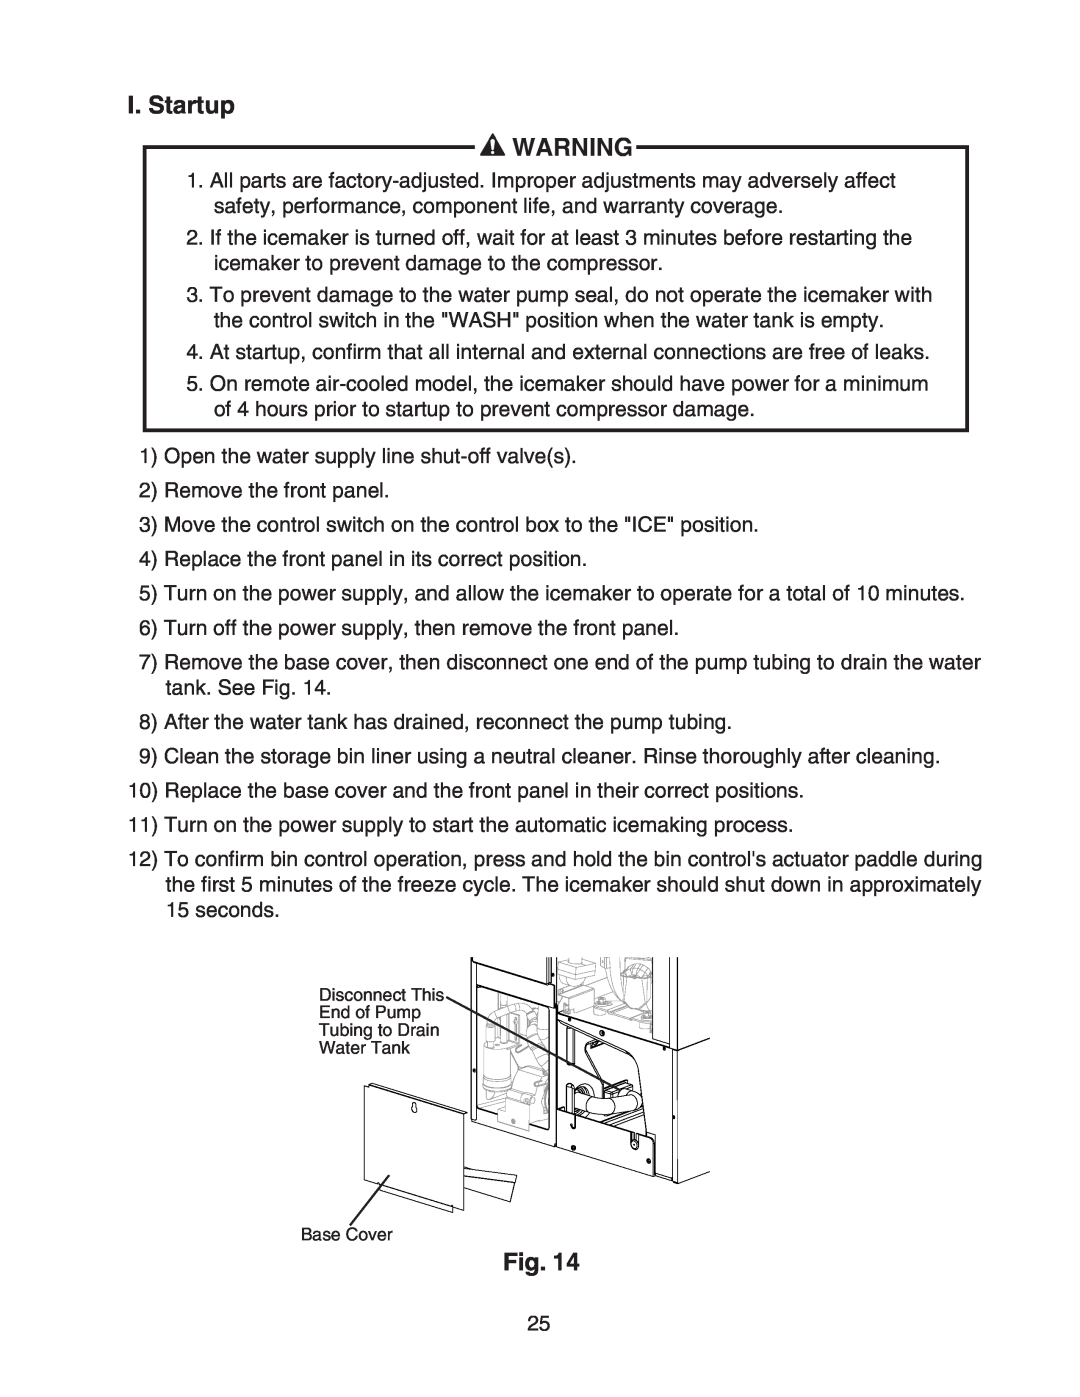 Hoshizaki KM-650MAH instruction manual I. Startup, Disconnect This End of Pump Tubing to Drain Water Tank Base Cover 